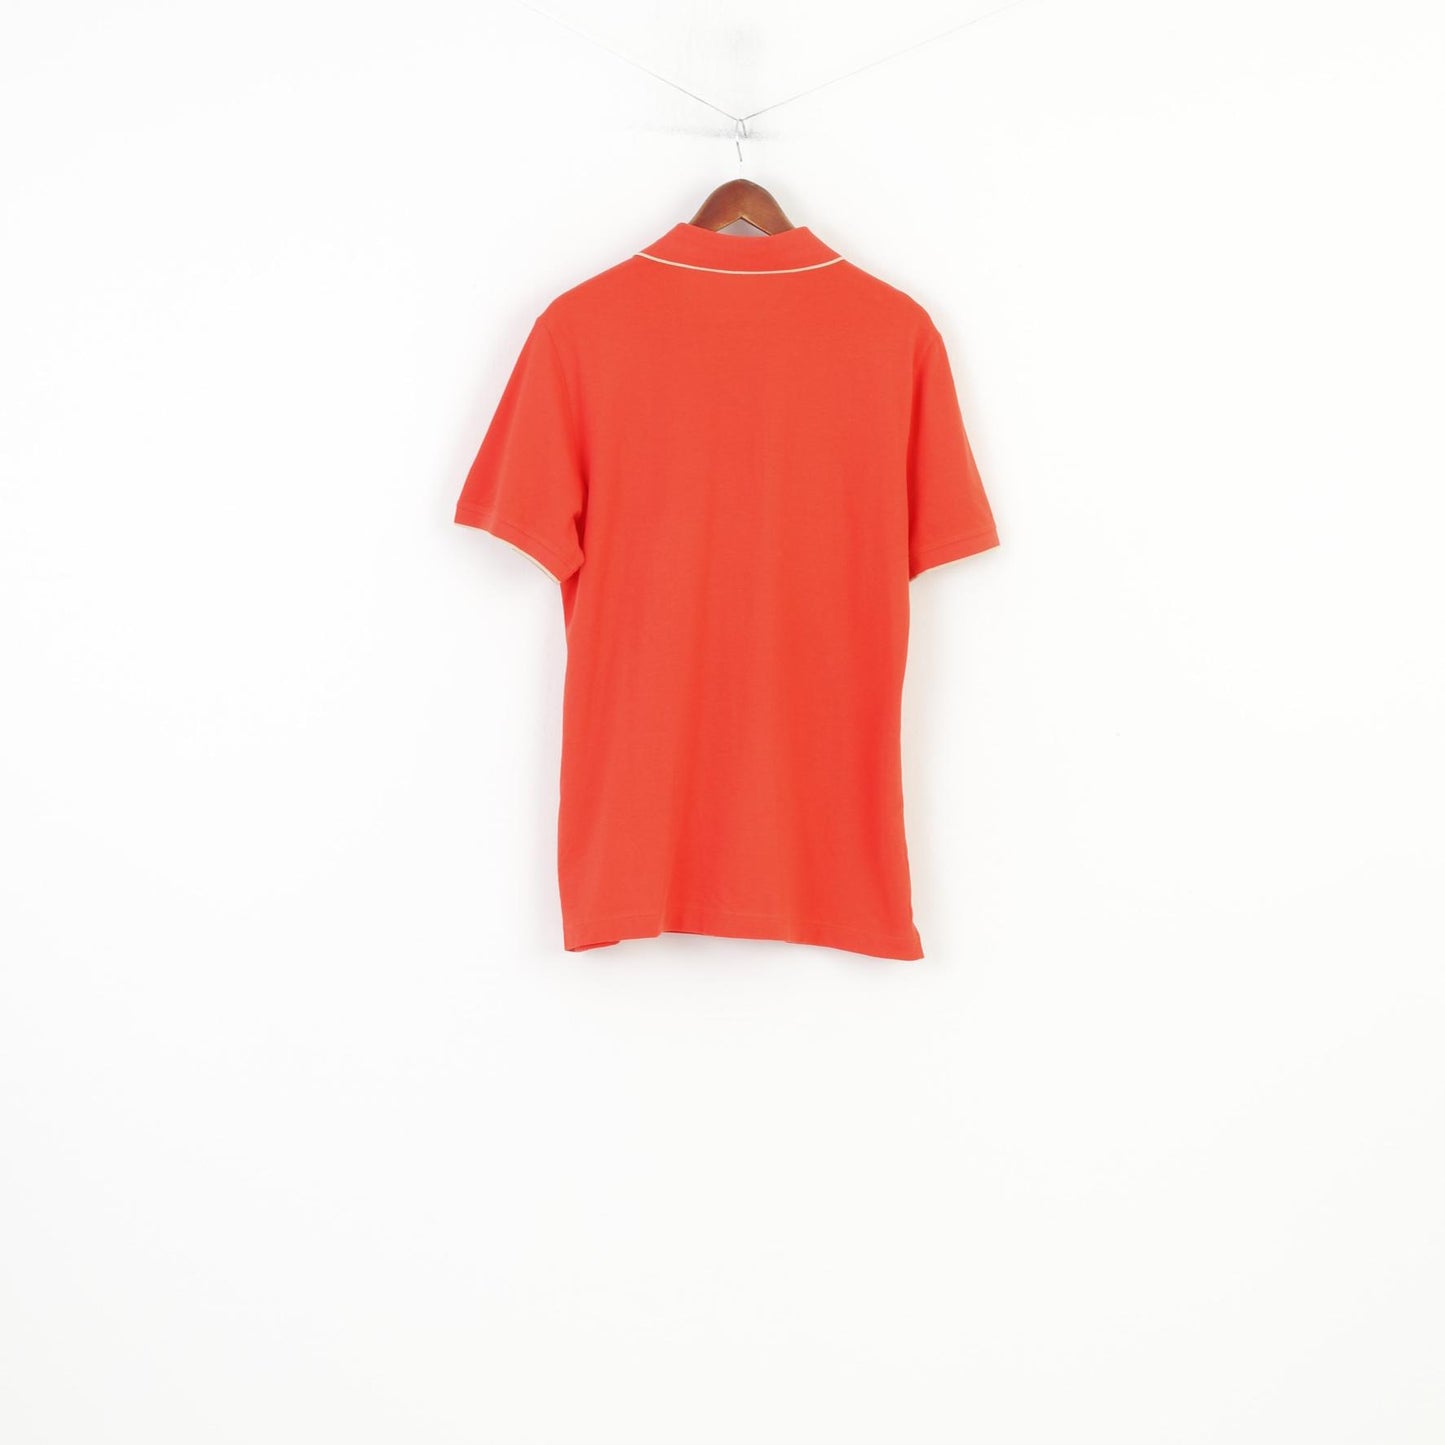 Nero Perla Men L Polo Shirt Orange Detailed Buttons Classic Short Sleeve Vintage Collar Top